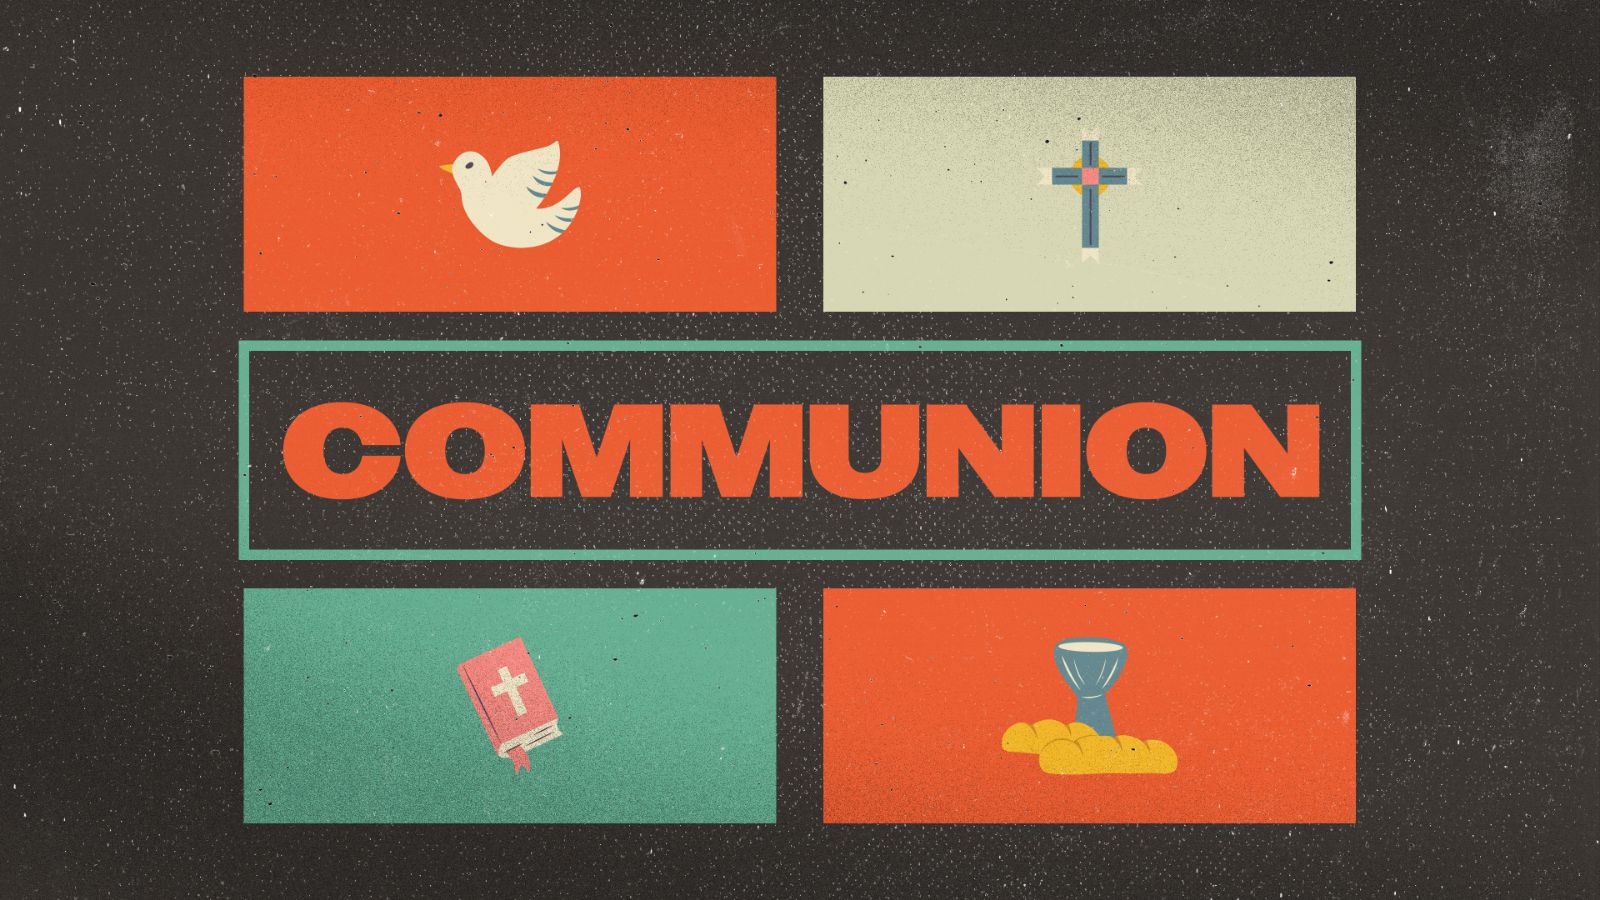 Communion